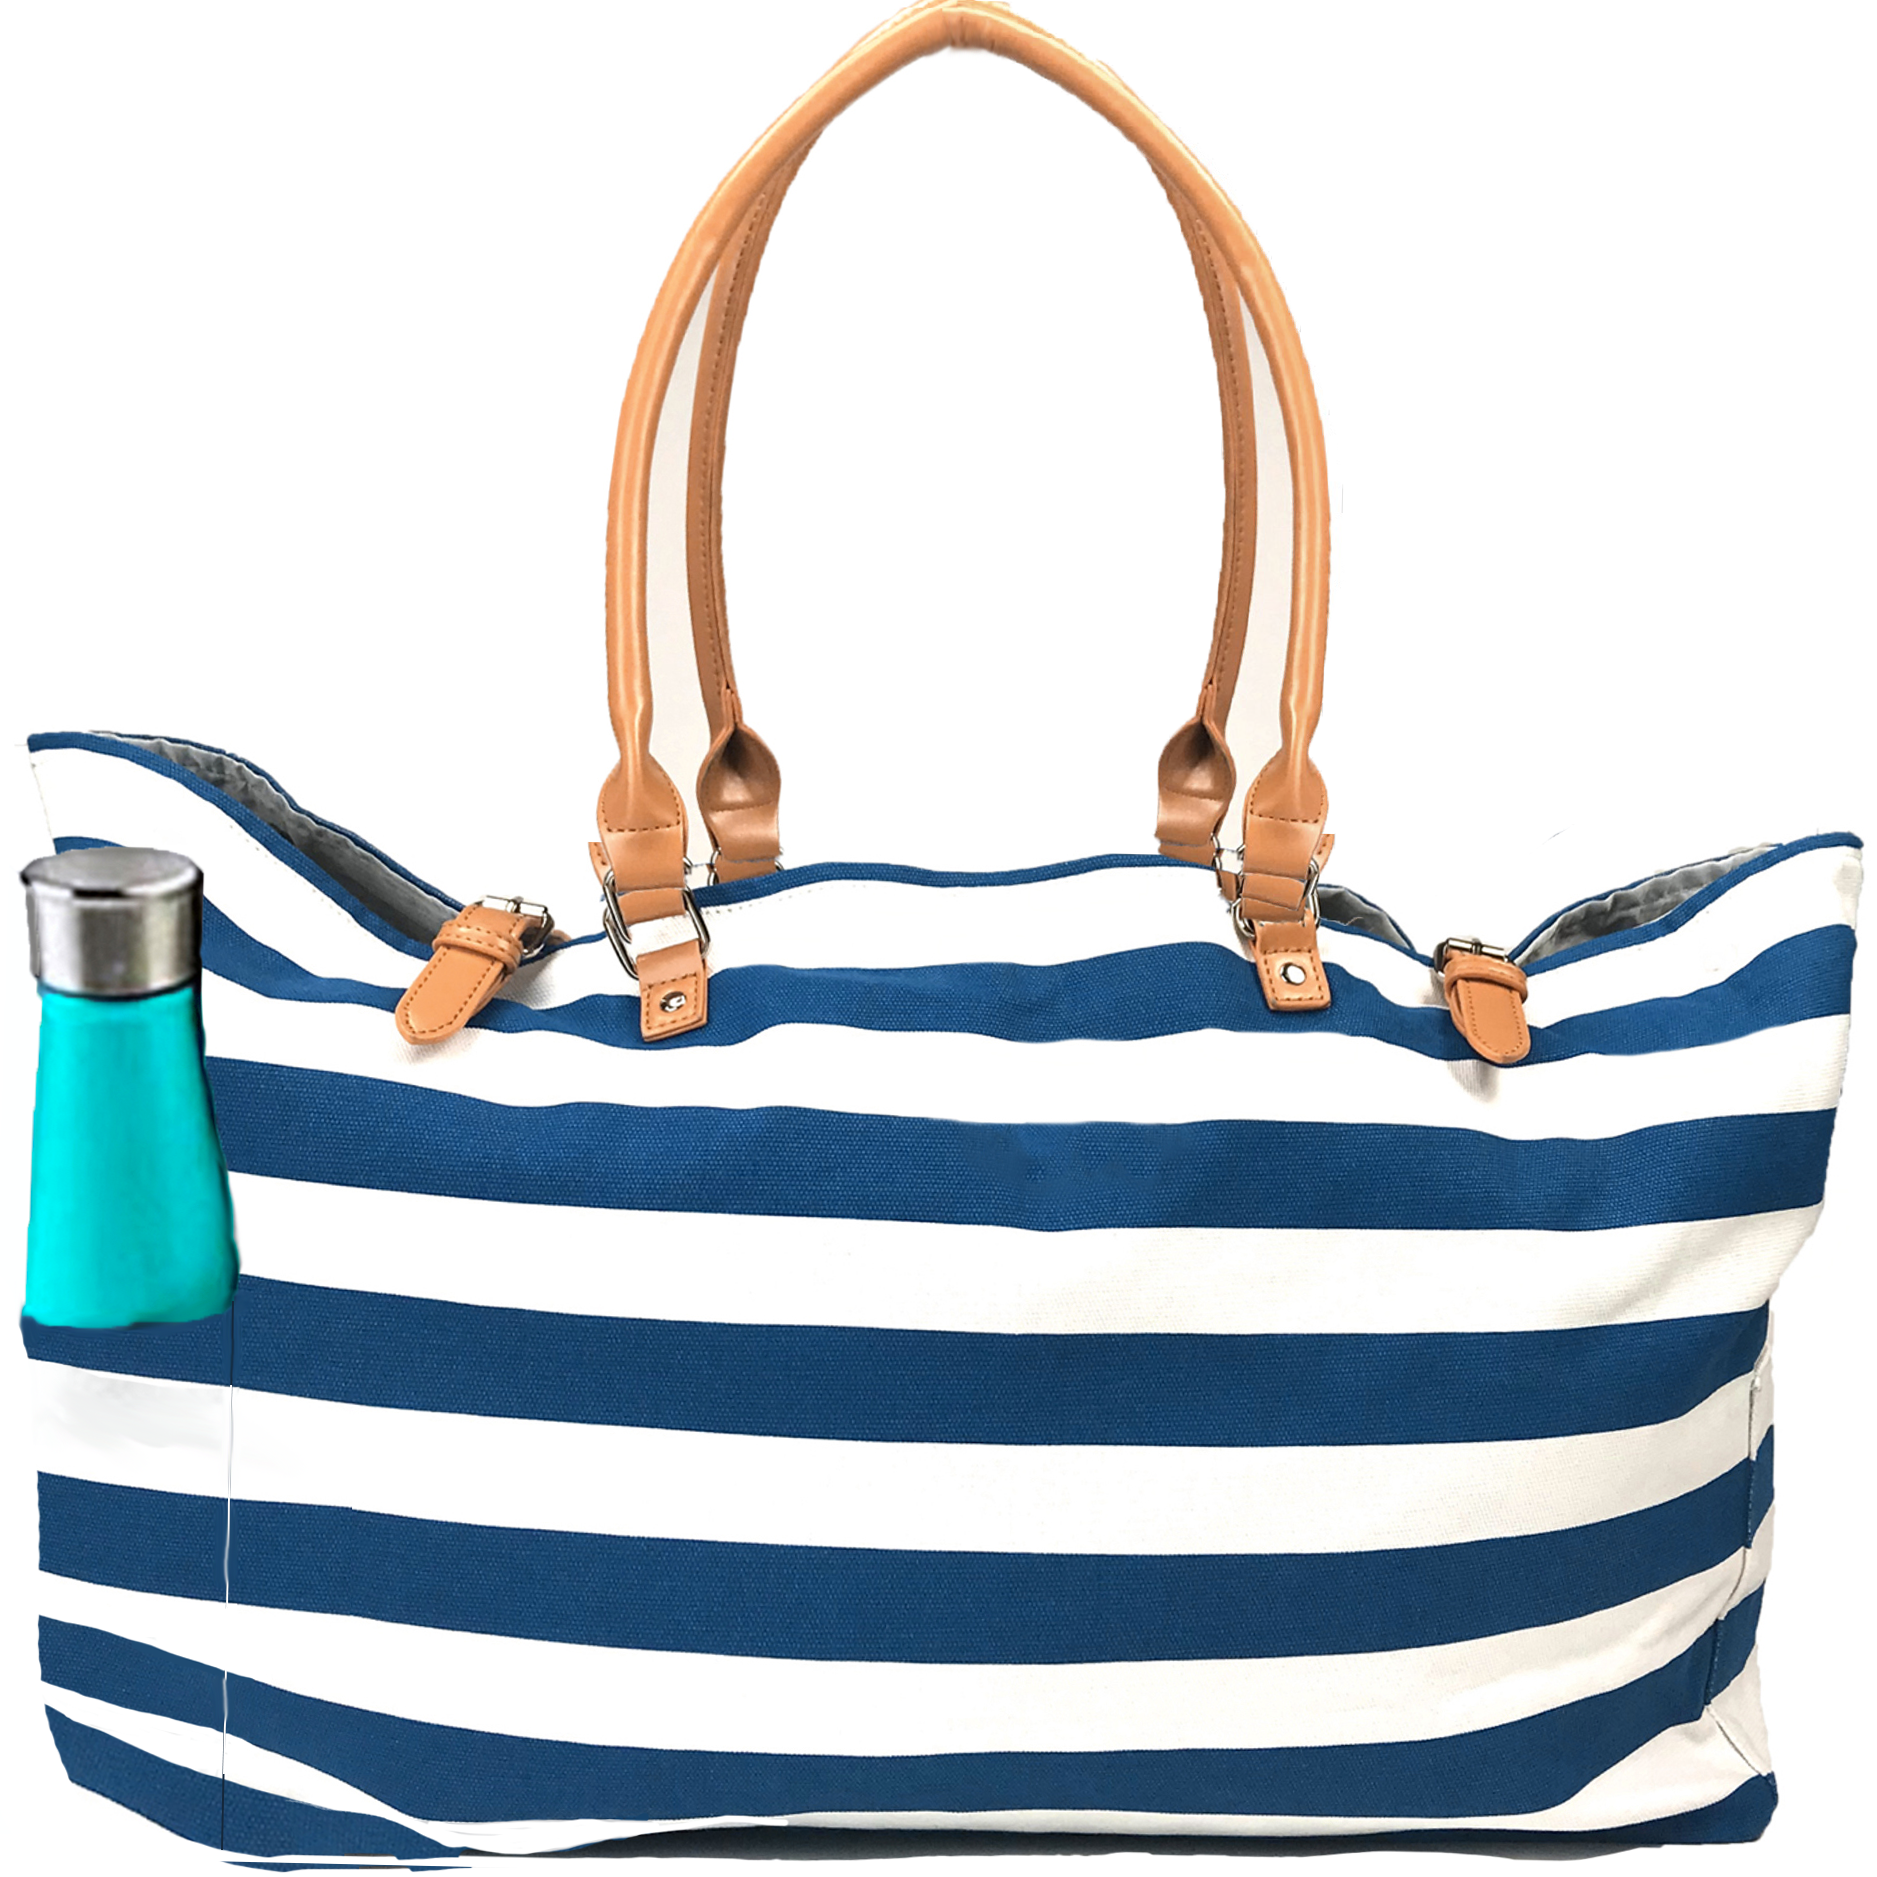 Kate Spade New York Blue & White Stripe Tote Bag | Striped purse, Striped  tote bags, Purses